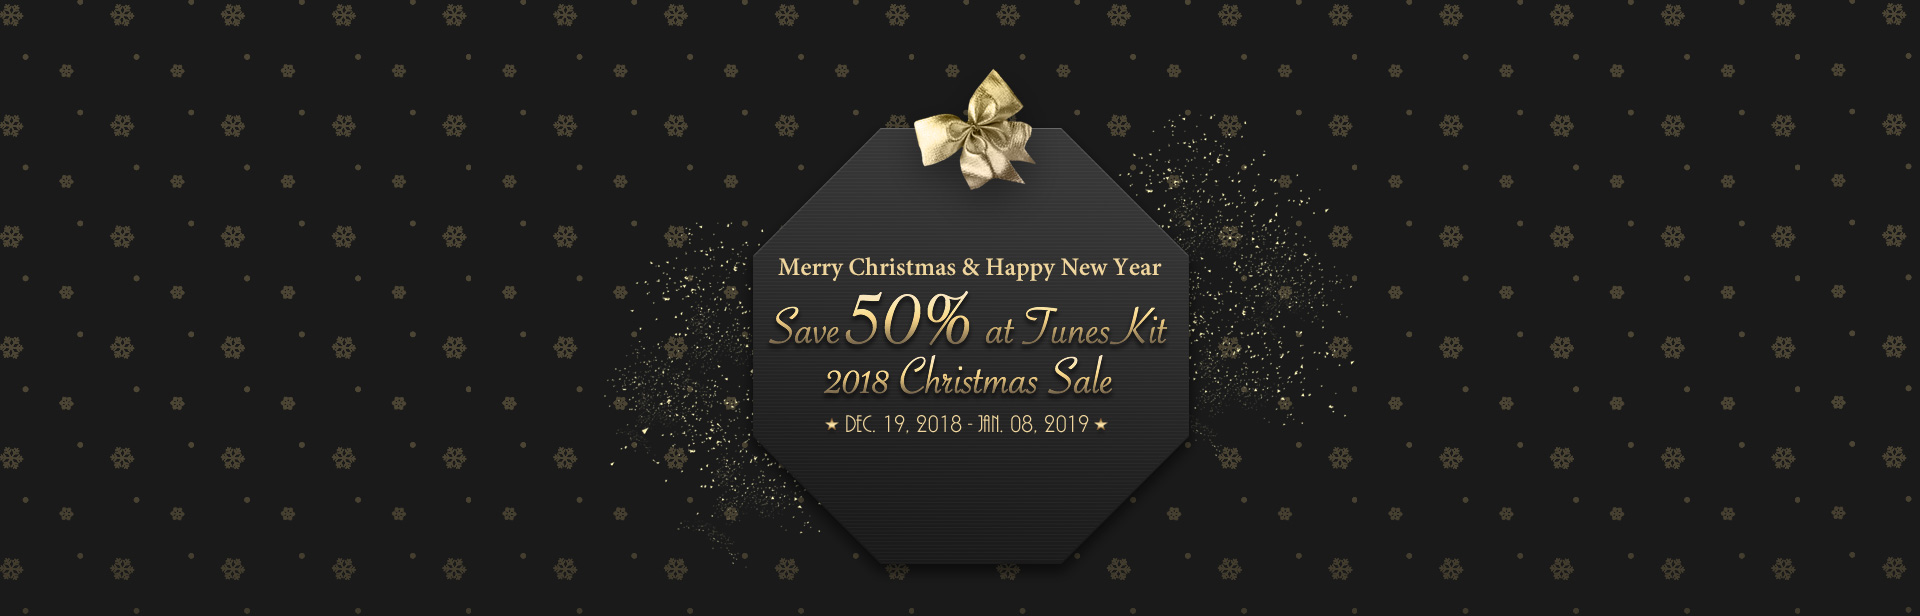 Save 50% at TunesKit 2018 Christmas Sales Dec.19.2018 - Jan.08.2019